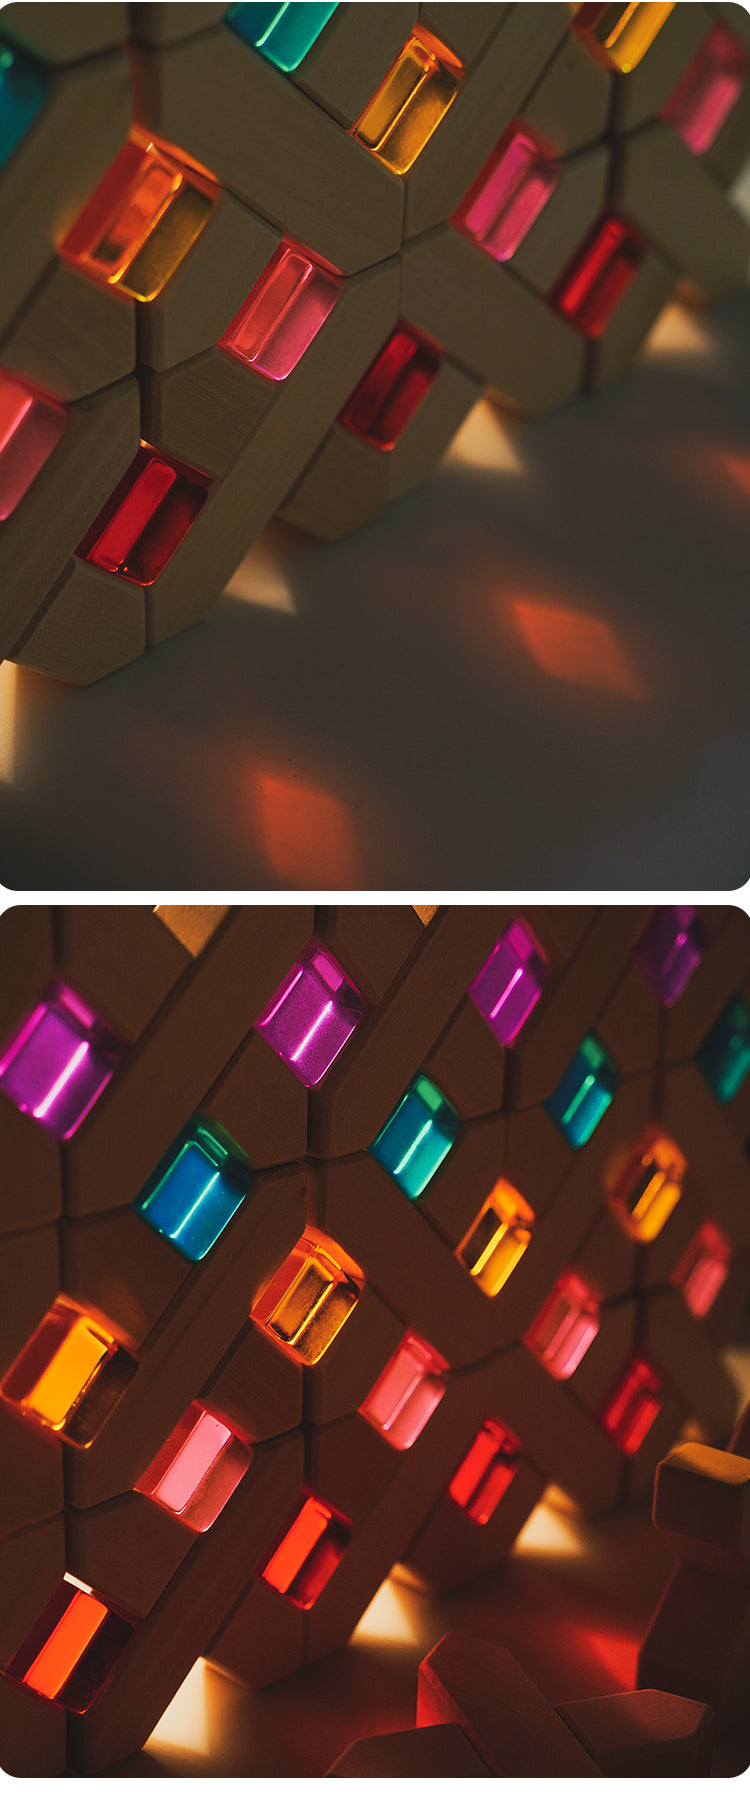 100 Pcs Rainbow Translucent Lucite Cubes Set with Storage Tray